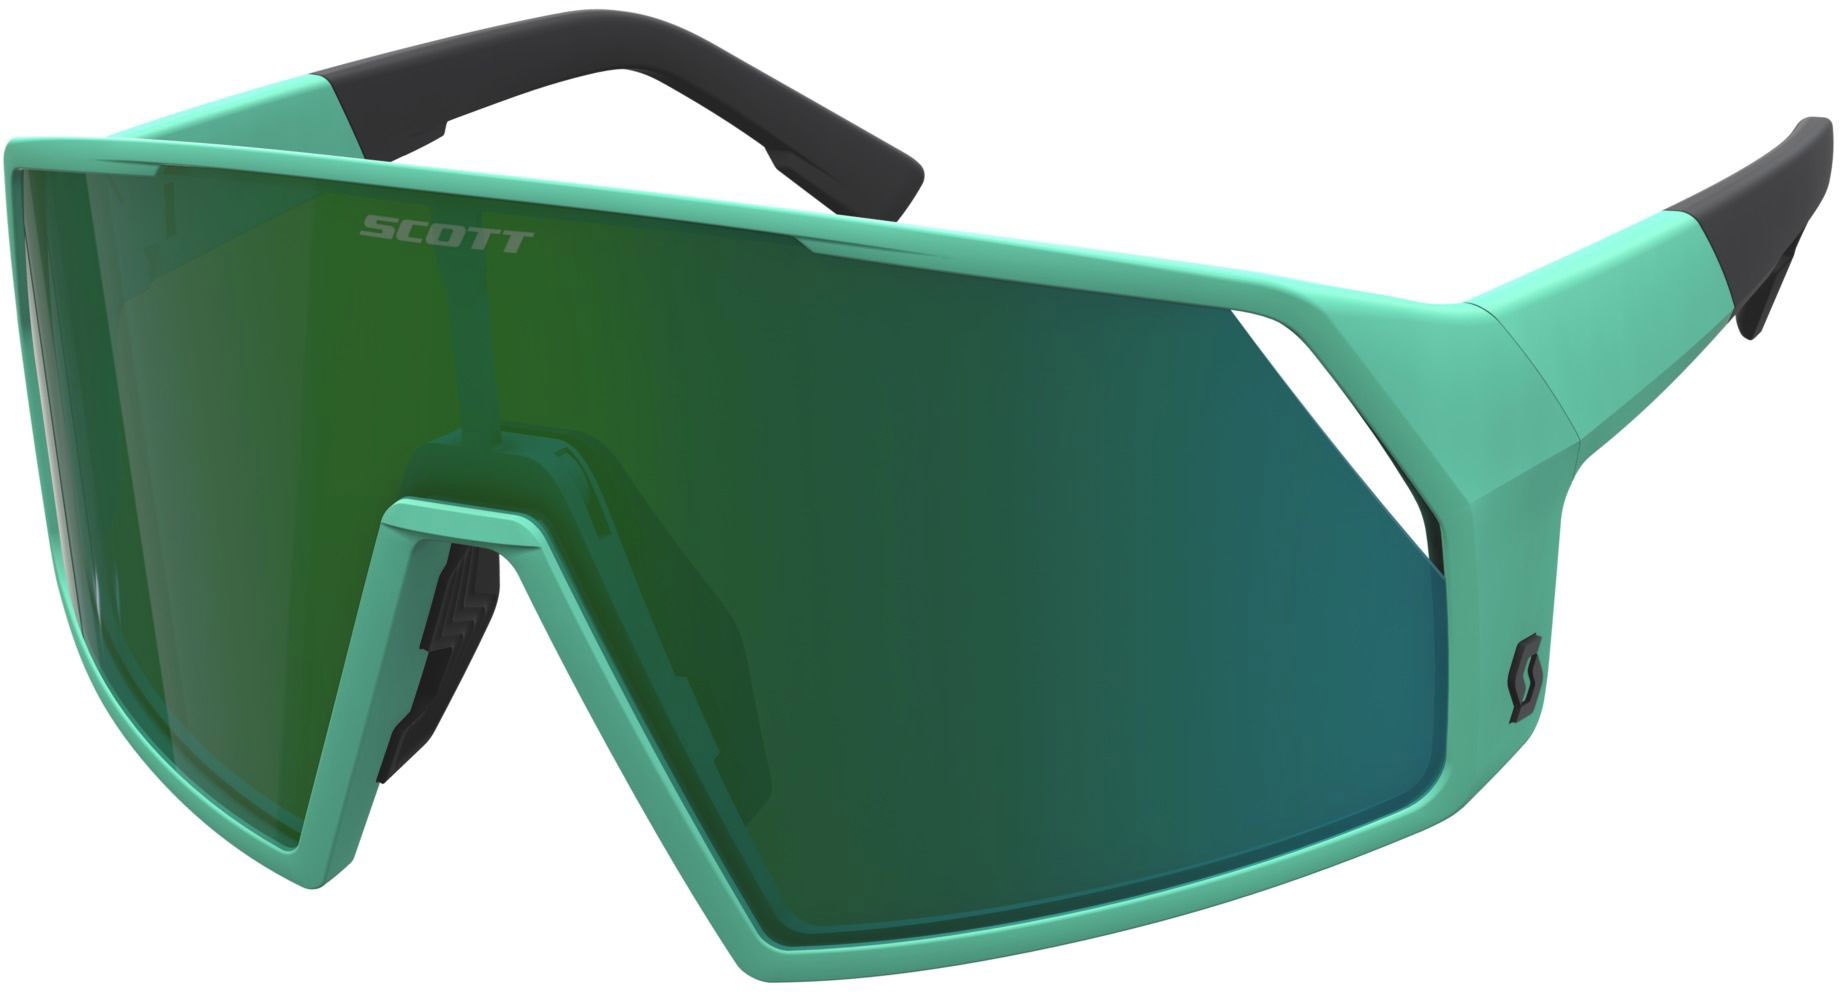 Scott Pro Shield Cykelbrille - Soft Teal Green / Green Chrome